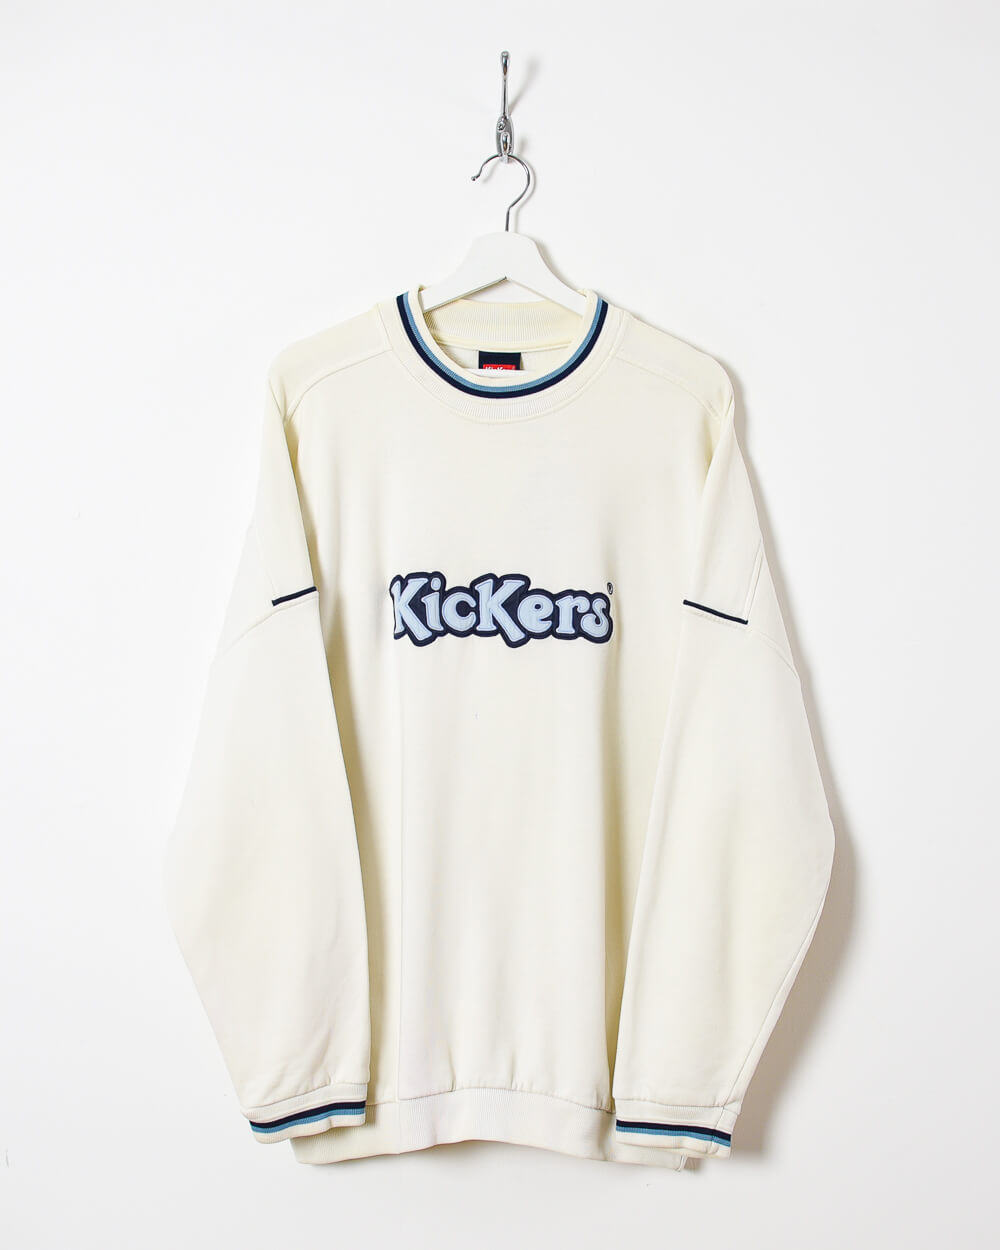 Kickers Sweatshirt - Large - Domno Vintage 90s, 80s, 00s Retro and Vintage Clothing 